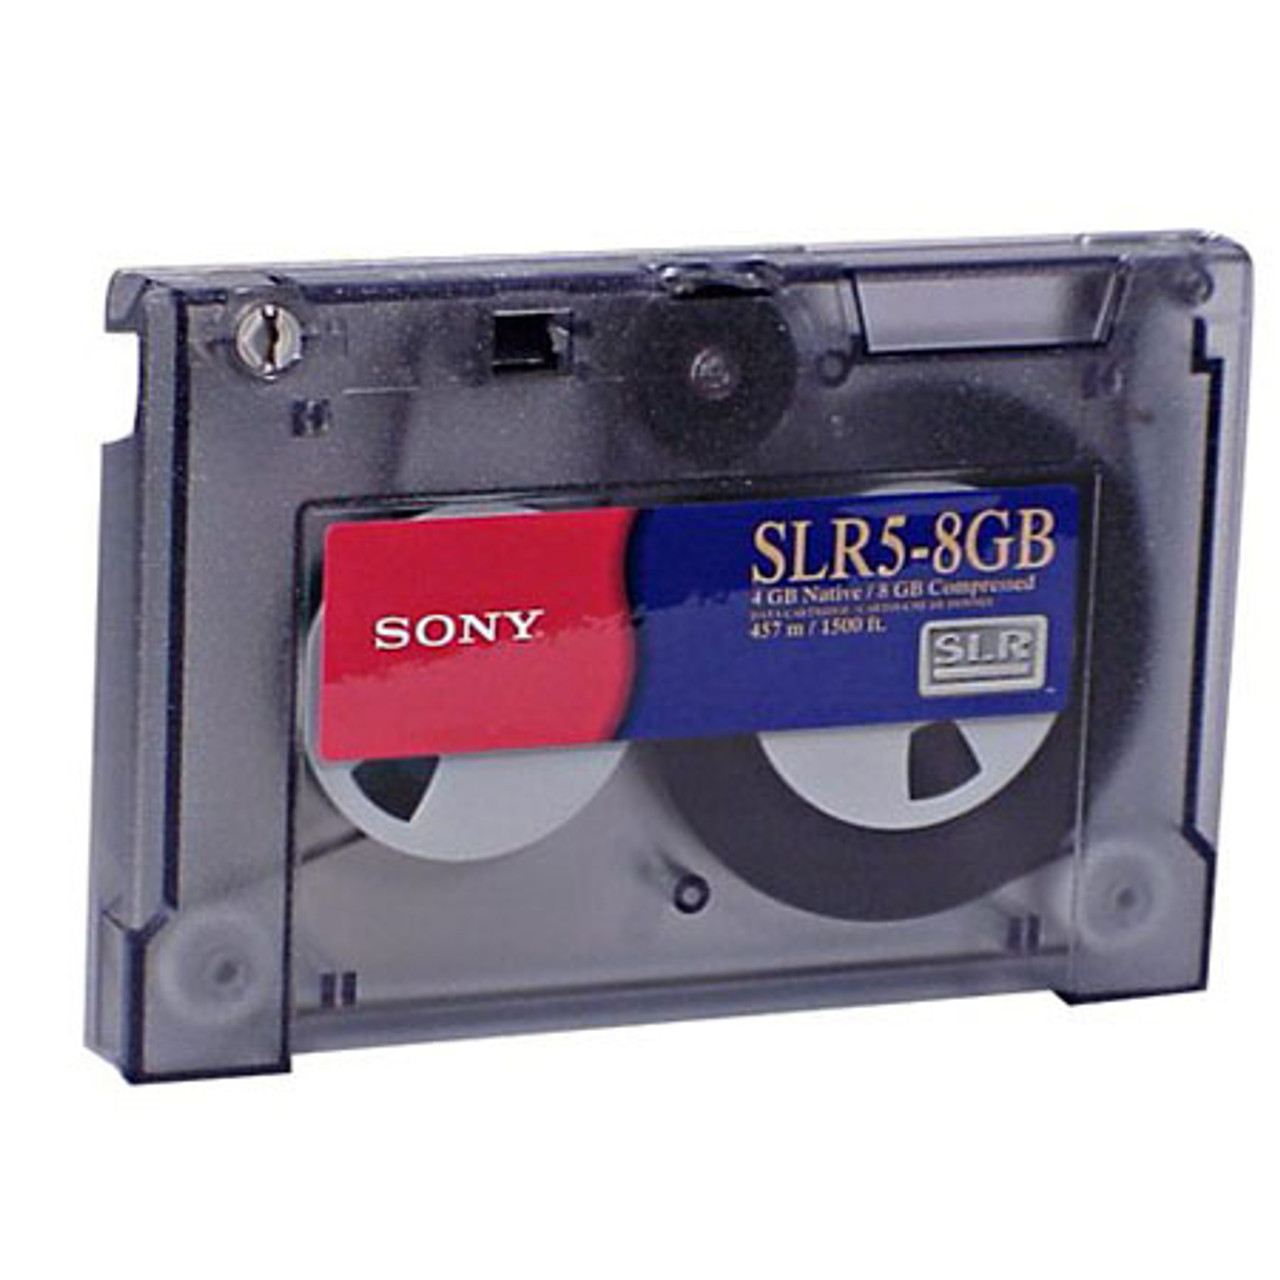 Sony SLR / MLR, SLR5 Data Cartridge, 4 / 8GB Backup Tape Media